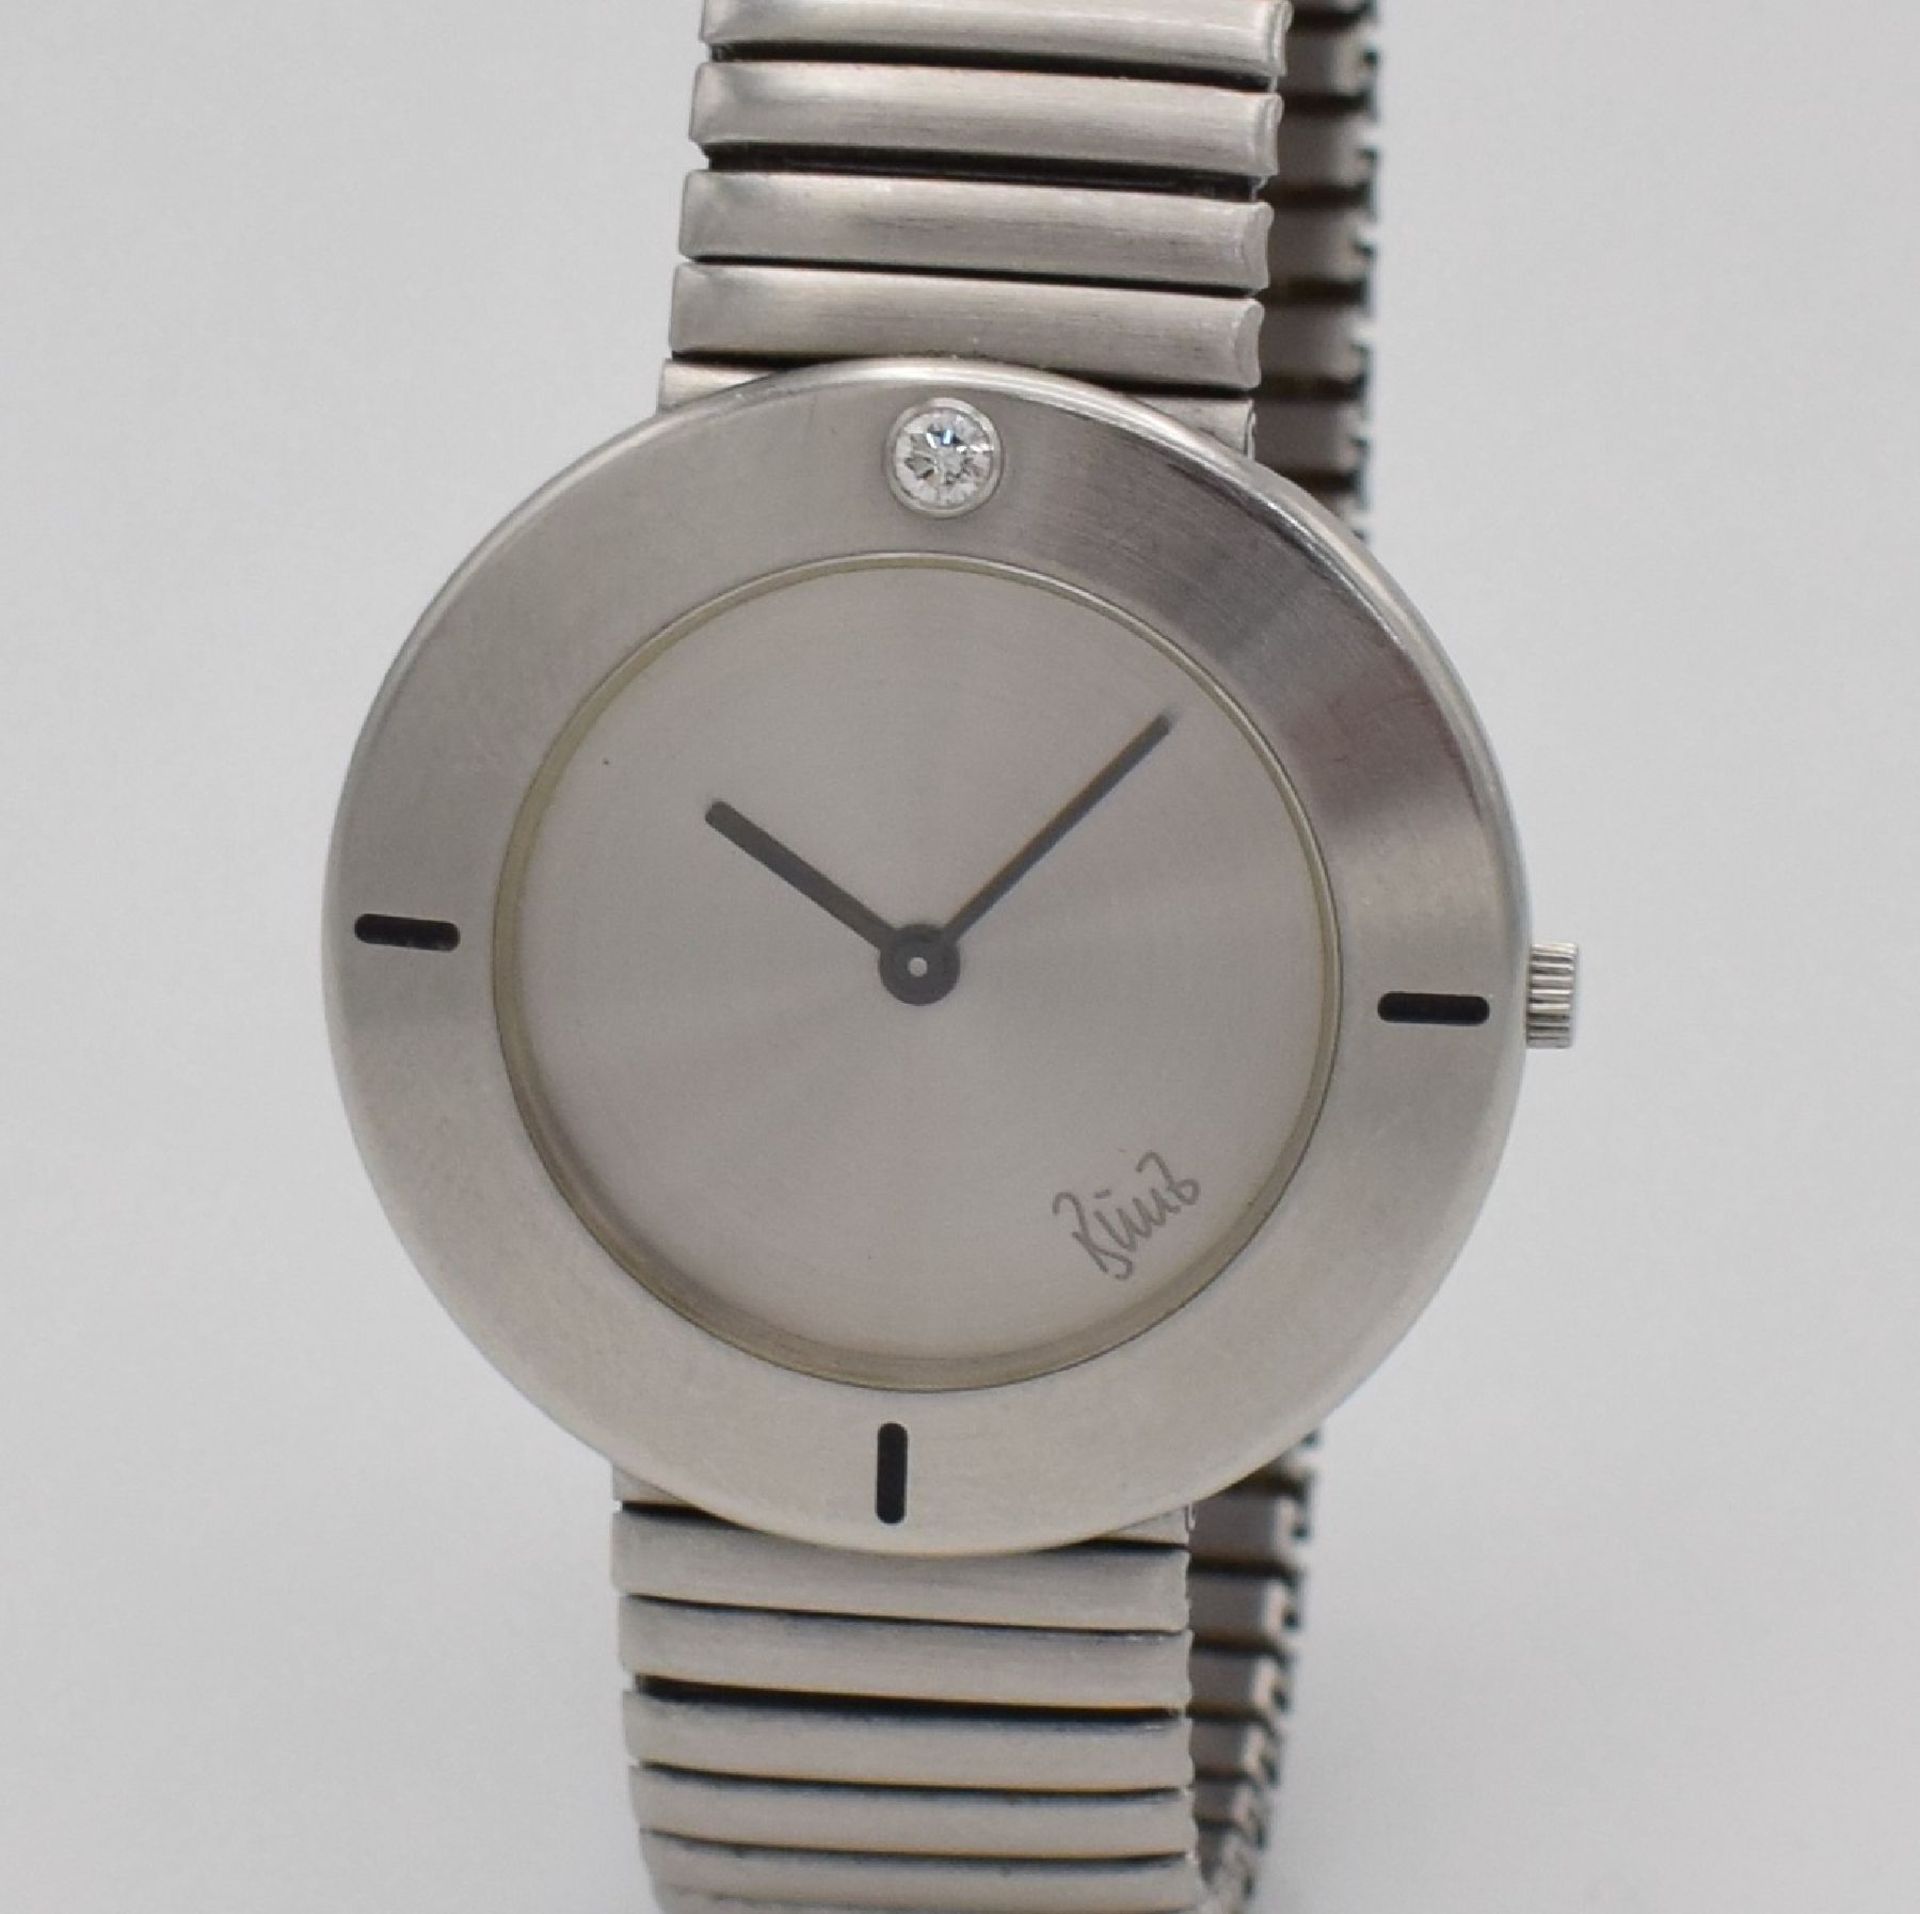 BUNZ wristwatch in stainless steel with diamond, Switzerland sold according to papers in November - Bild 4 aus 8